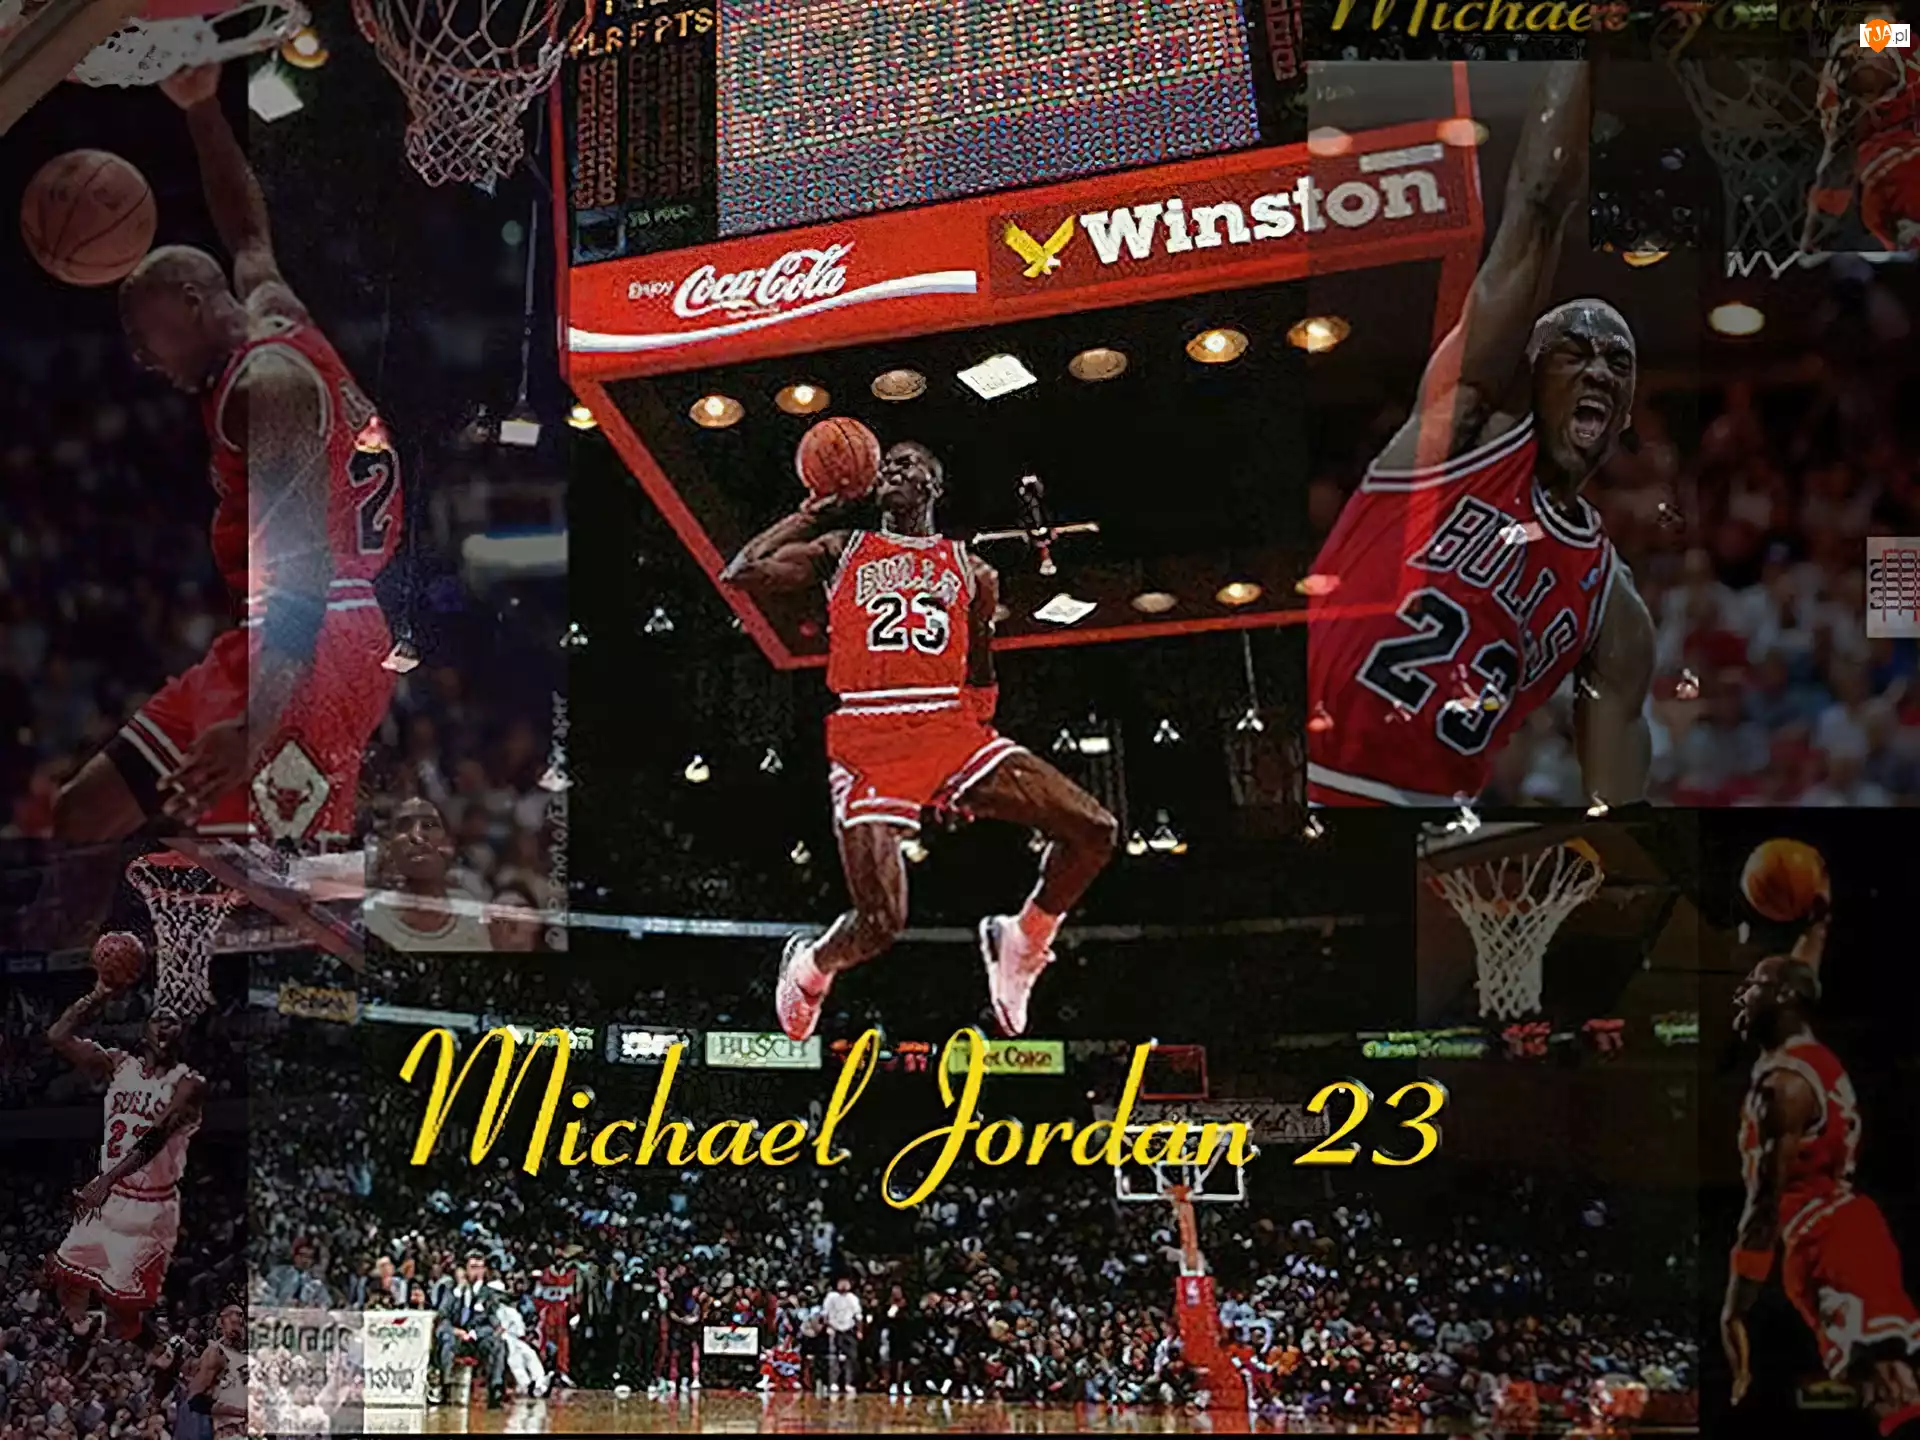 Koszykówka, wyskok, koszykarz, Michael Jordan